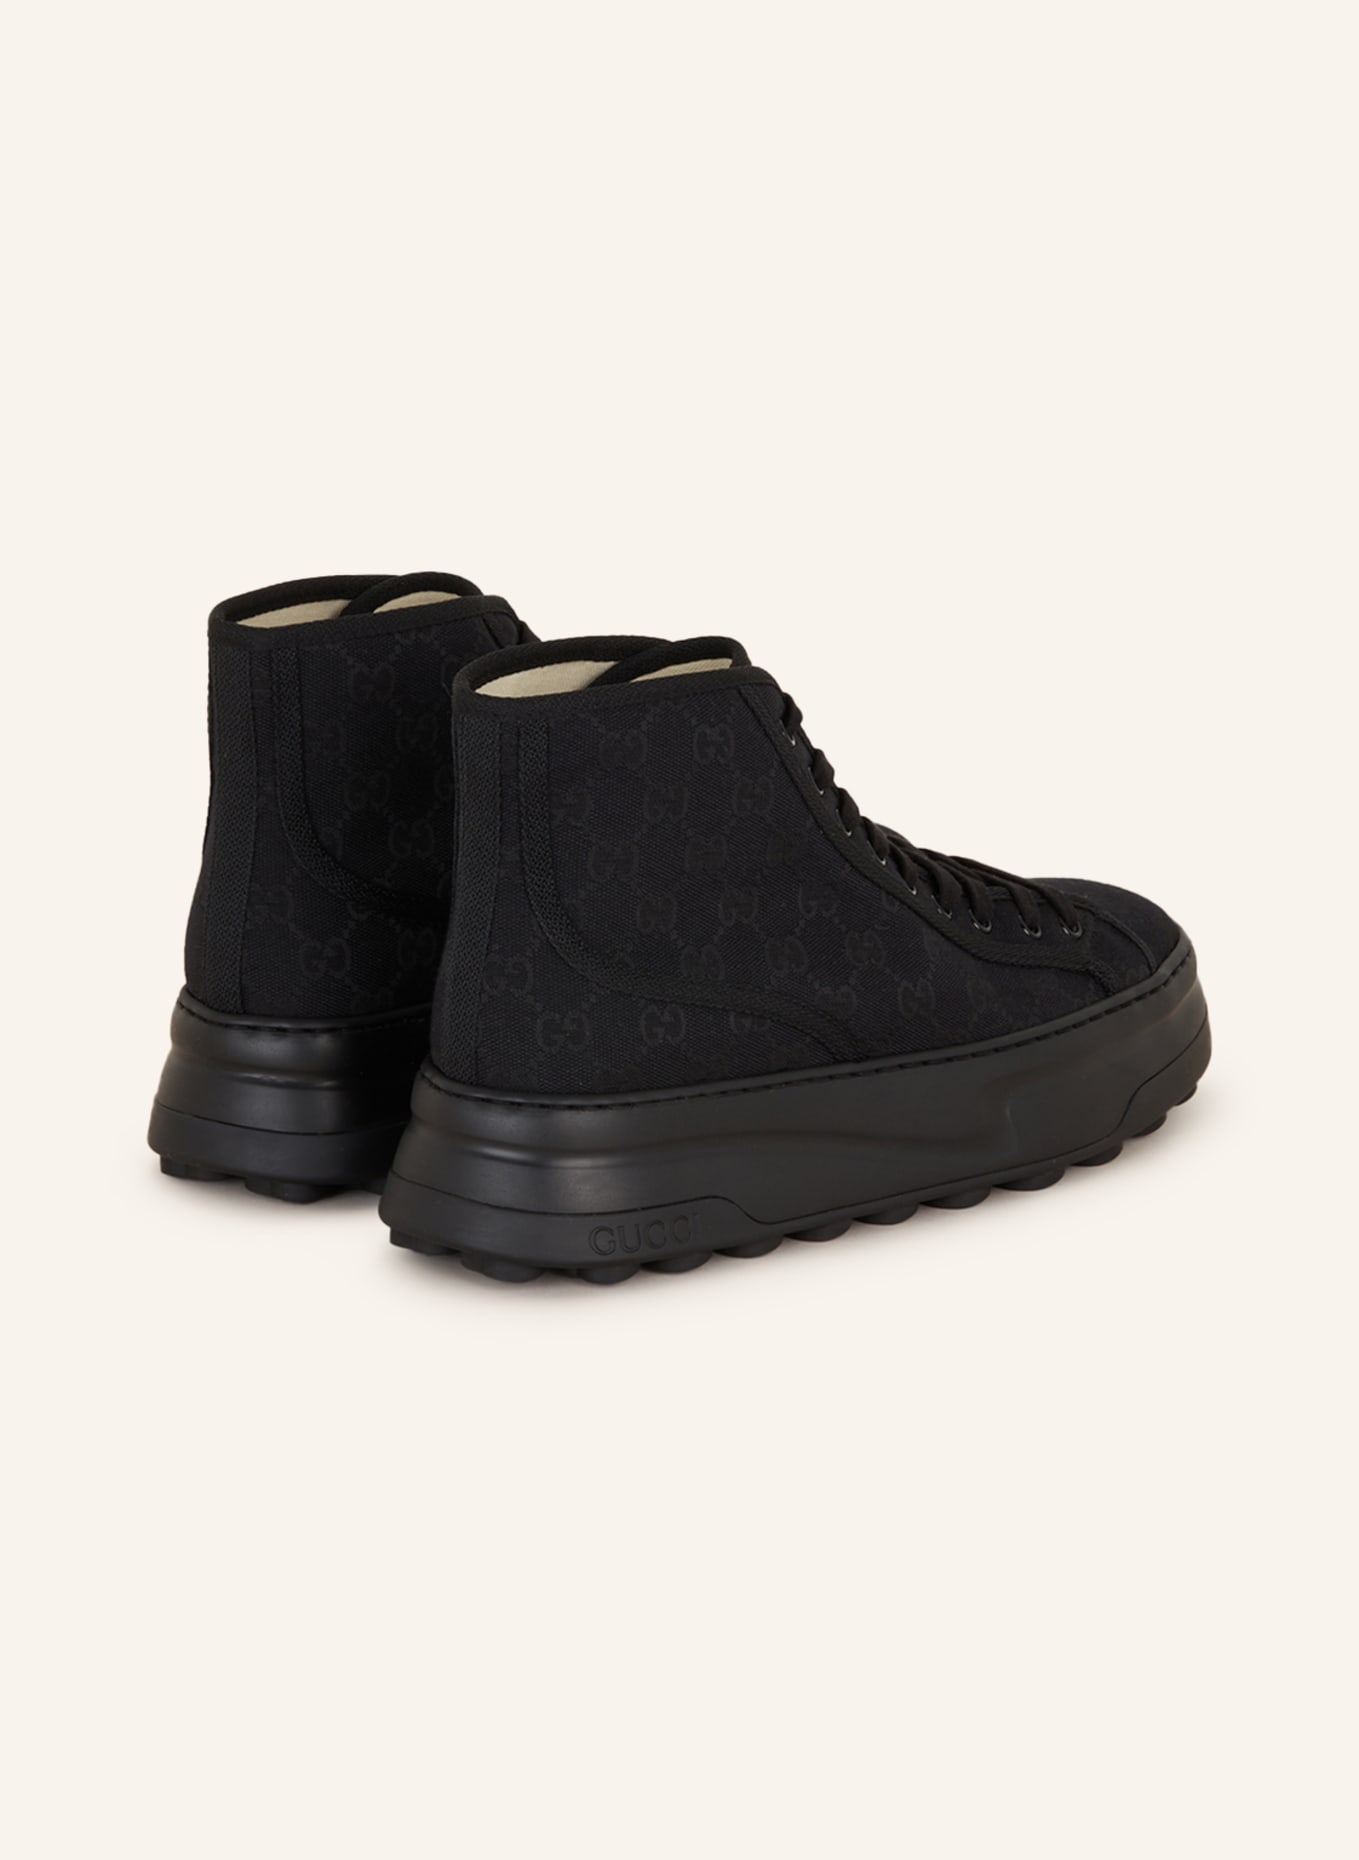 GUCCI Hightop-Sneaker, Farbe: 1000 BLACK/BLACK (Bild 2)